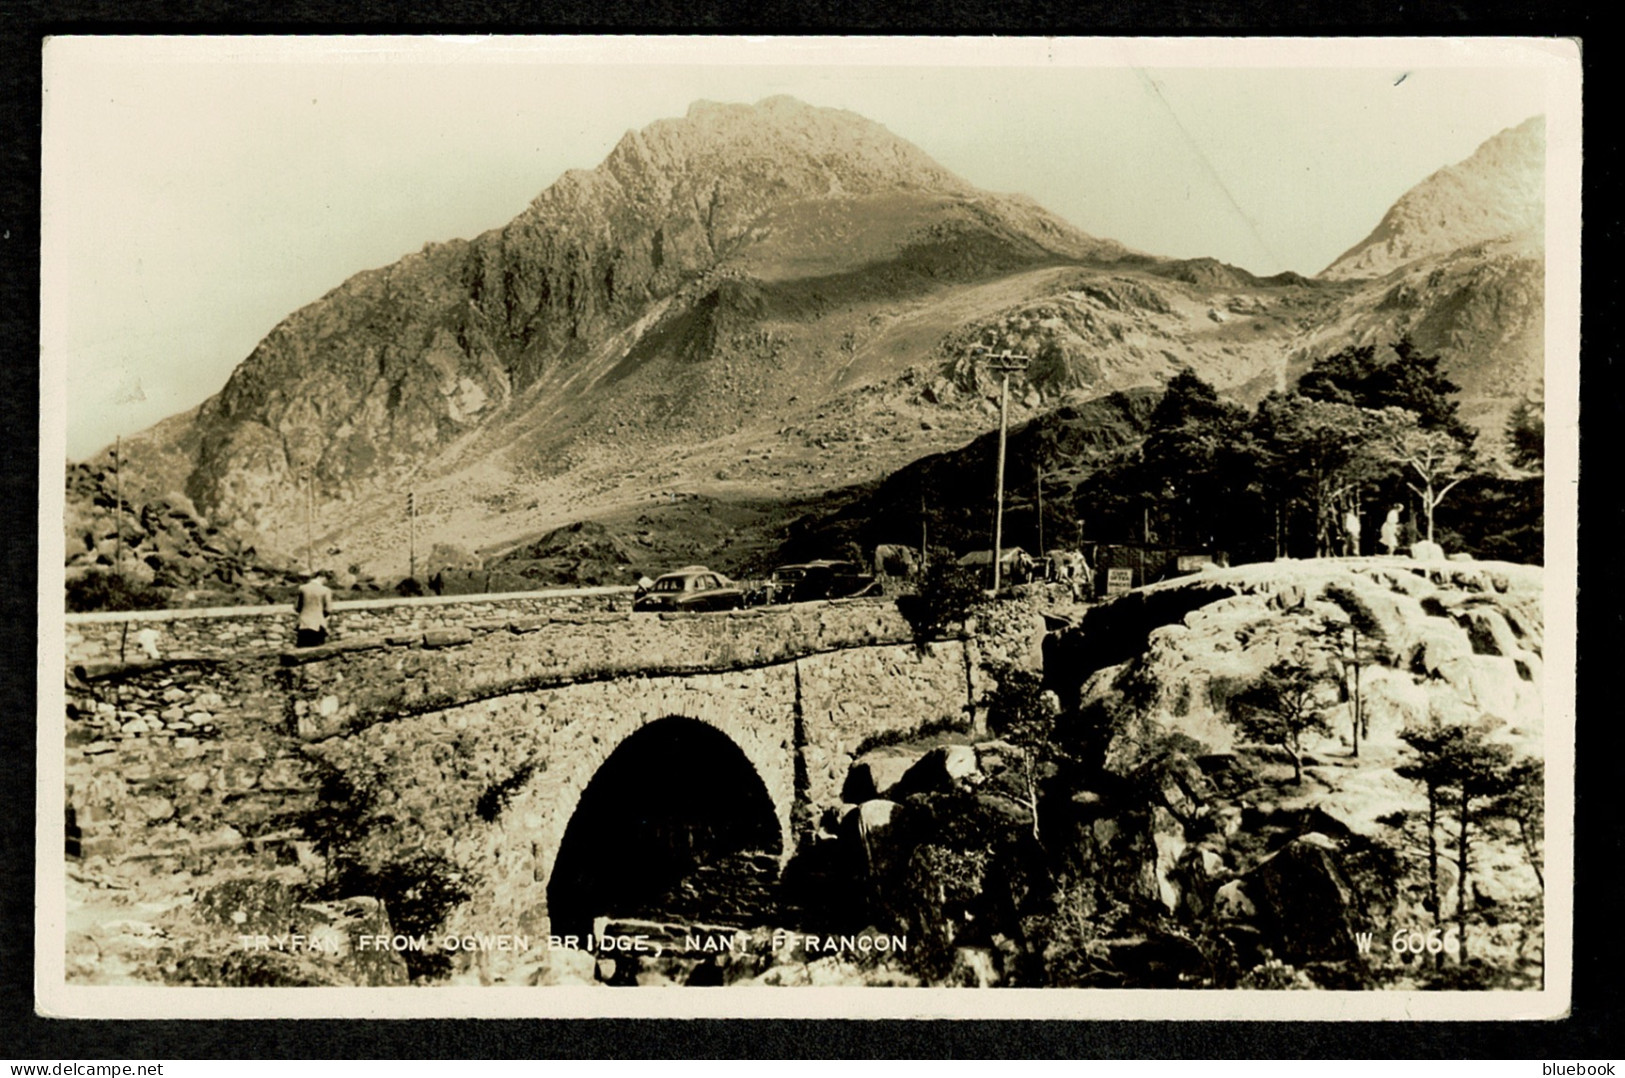 Ref  1604  -  Real Photo Postcard - From Ogwen Bridge - Nant Ffrancon Caernarvonshire Wales - Caernarvonshire